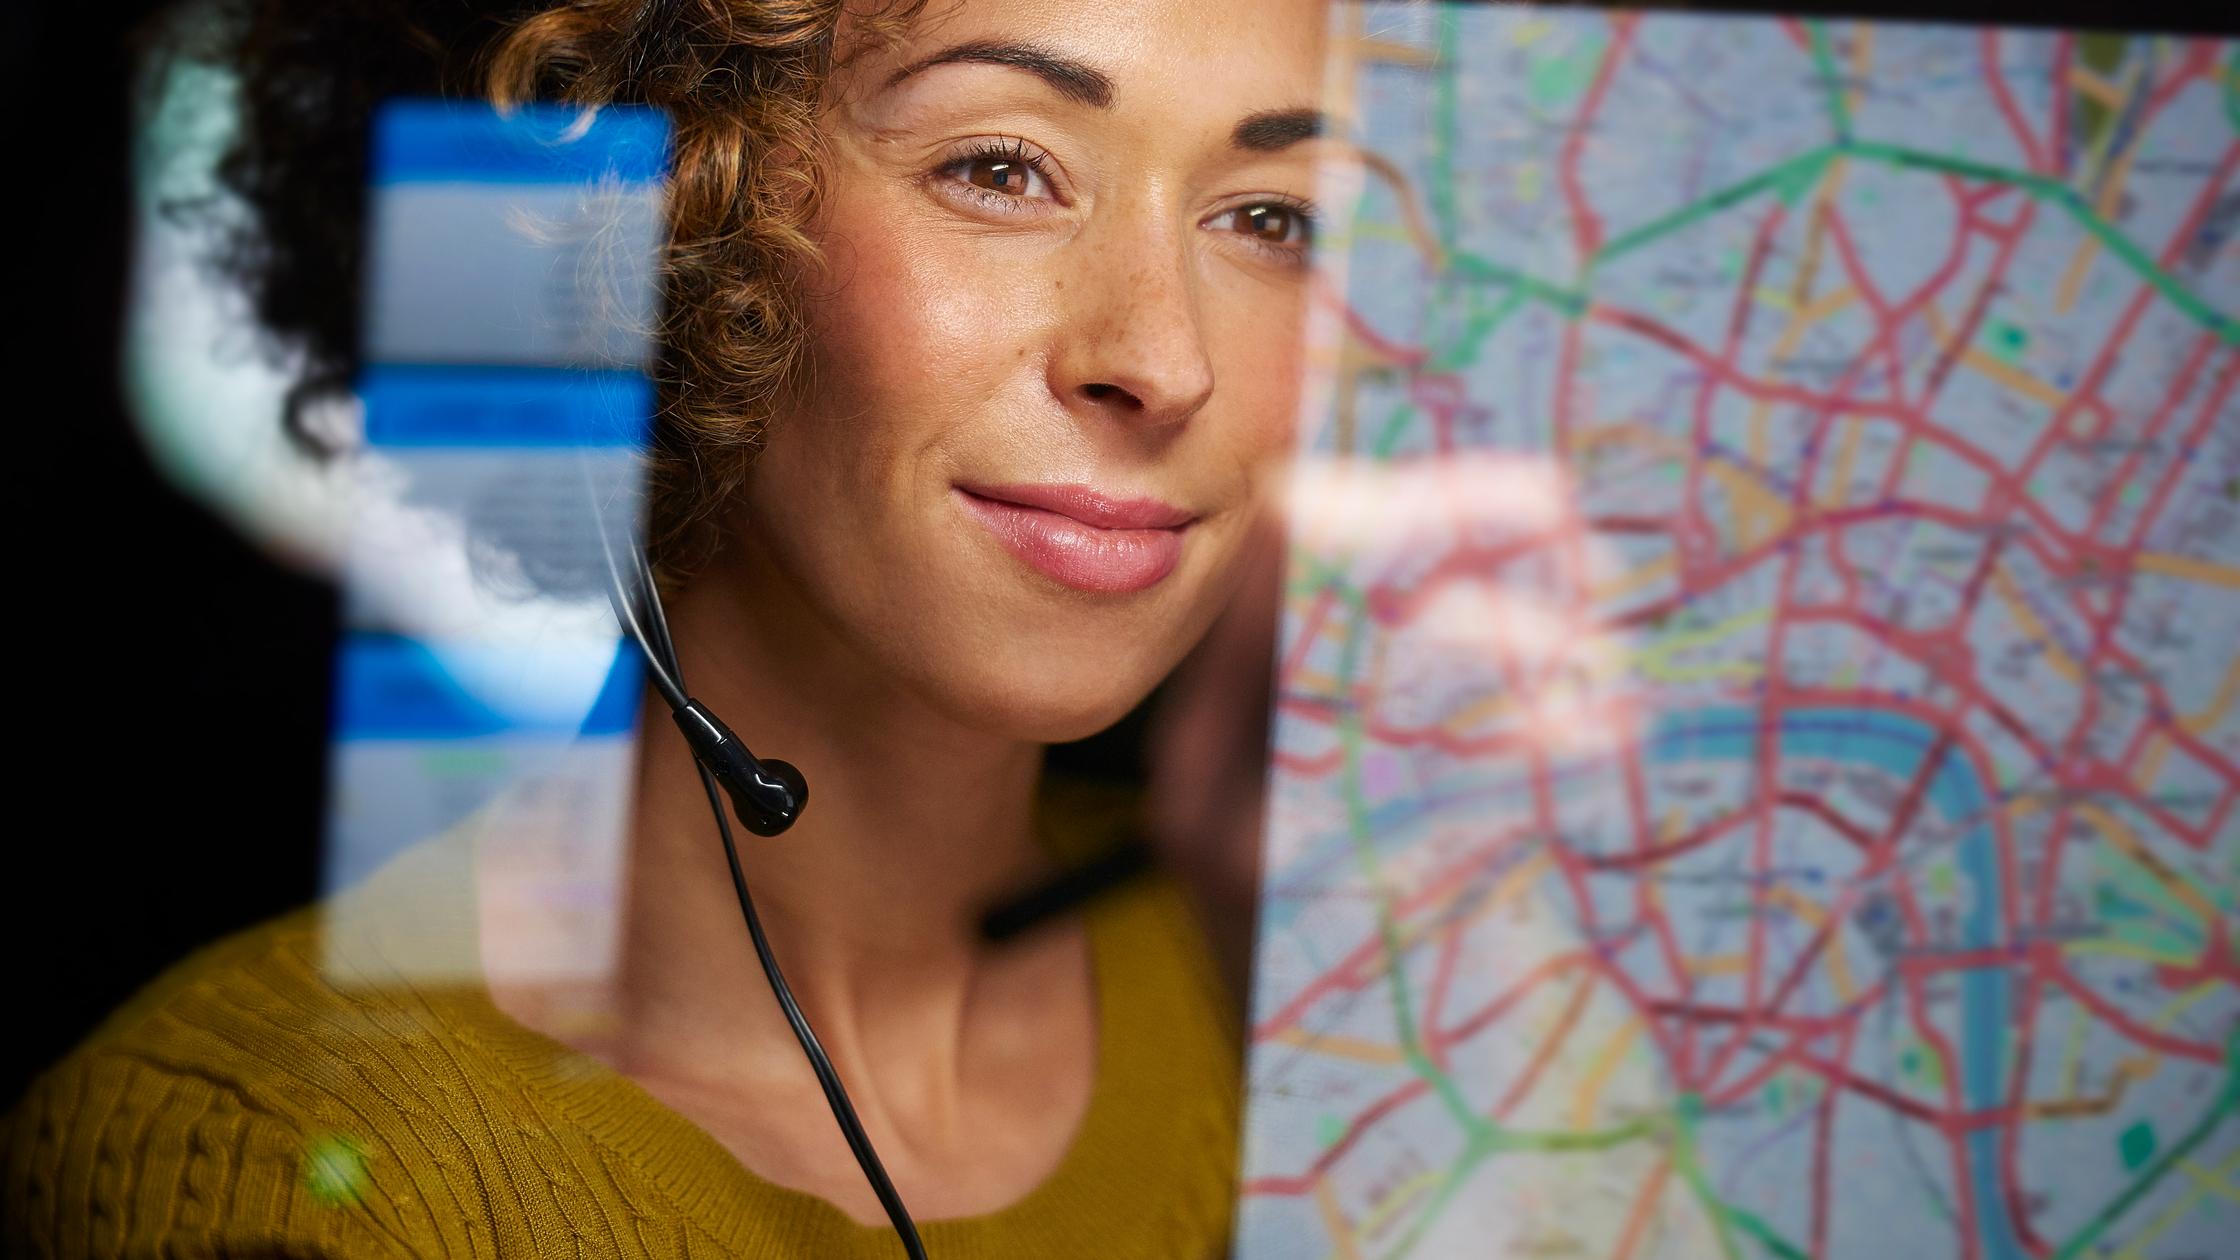 Digital trust: woman watching map on screen